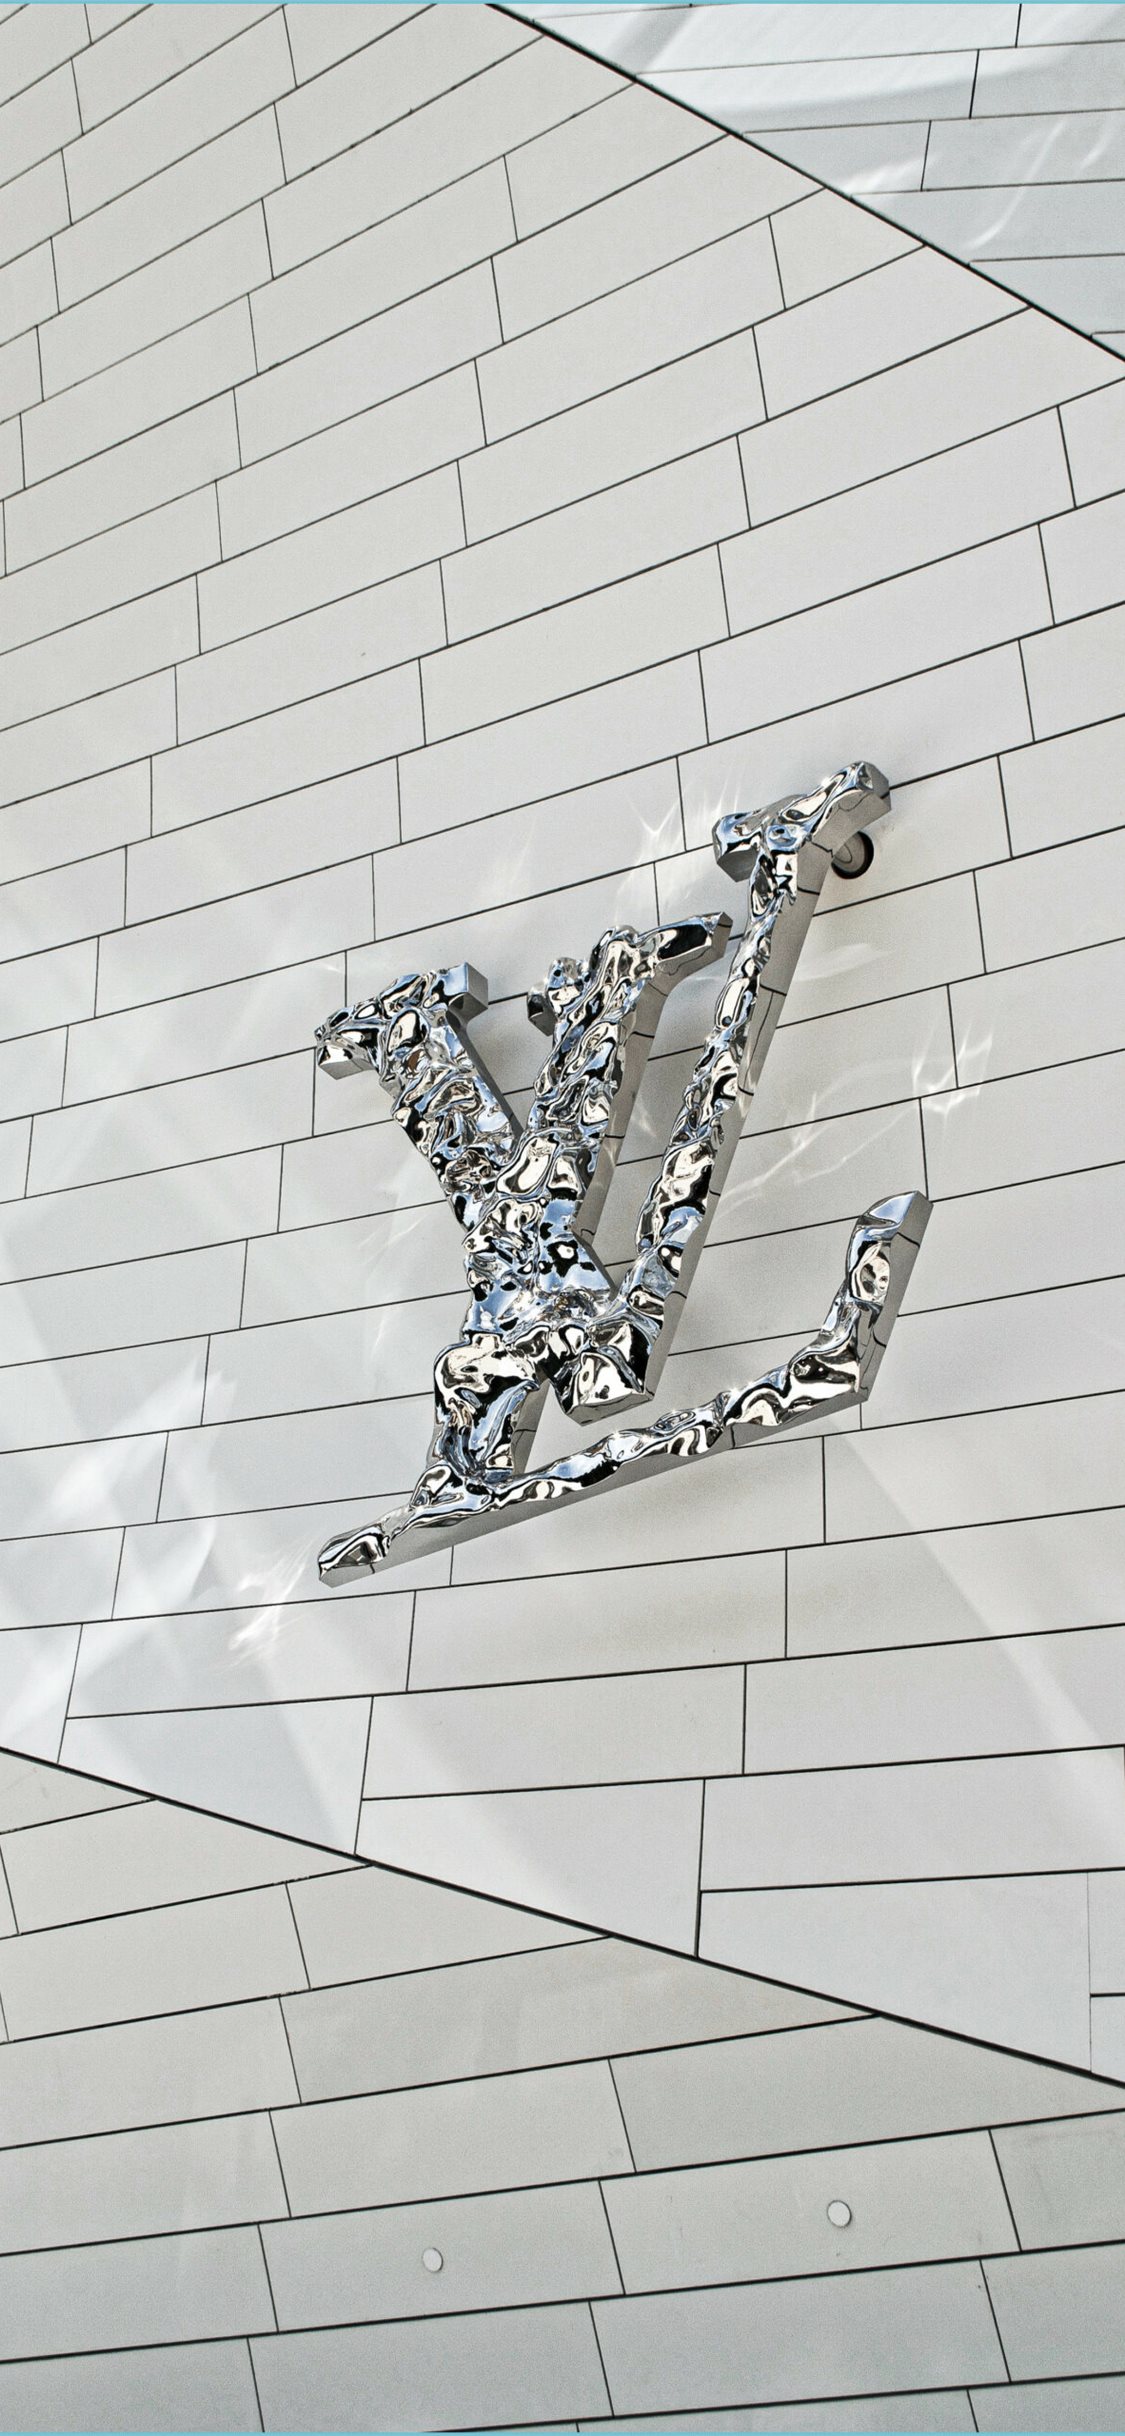 Louis Vuitton Pictures Free Images On Unsplash Lou... iPhone wallpaper 